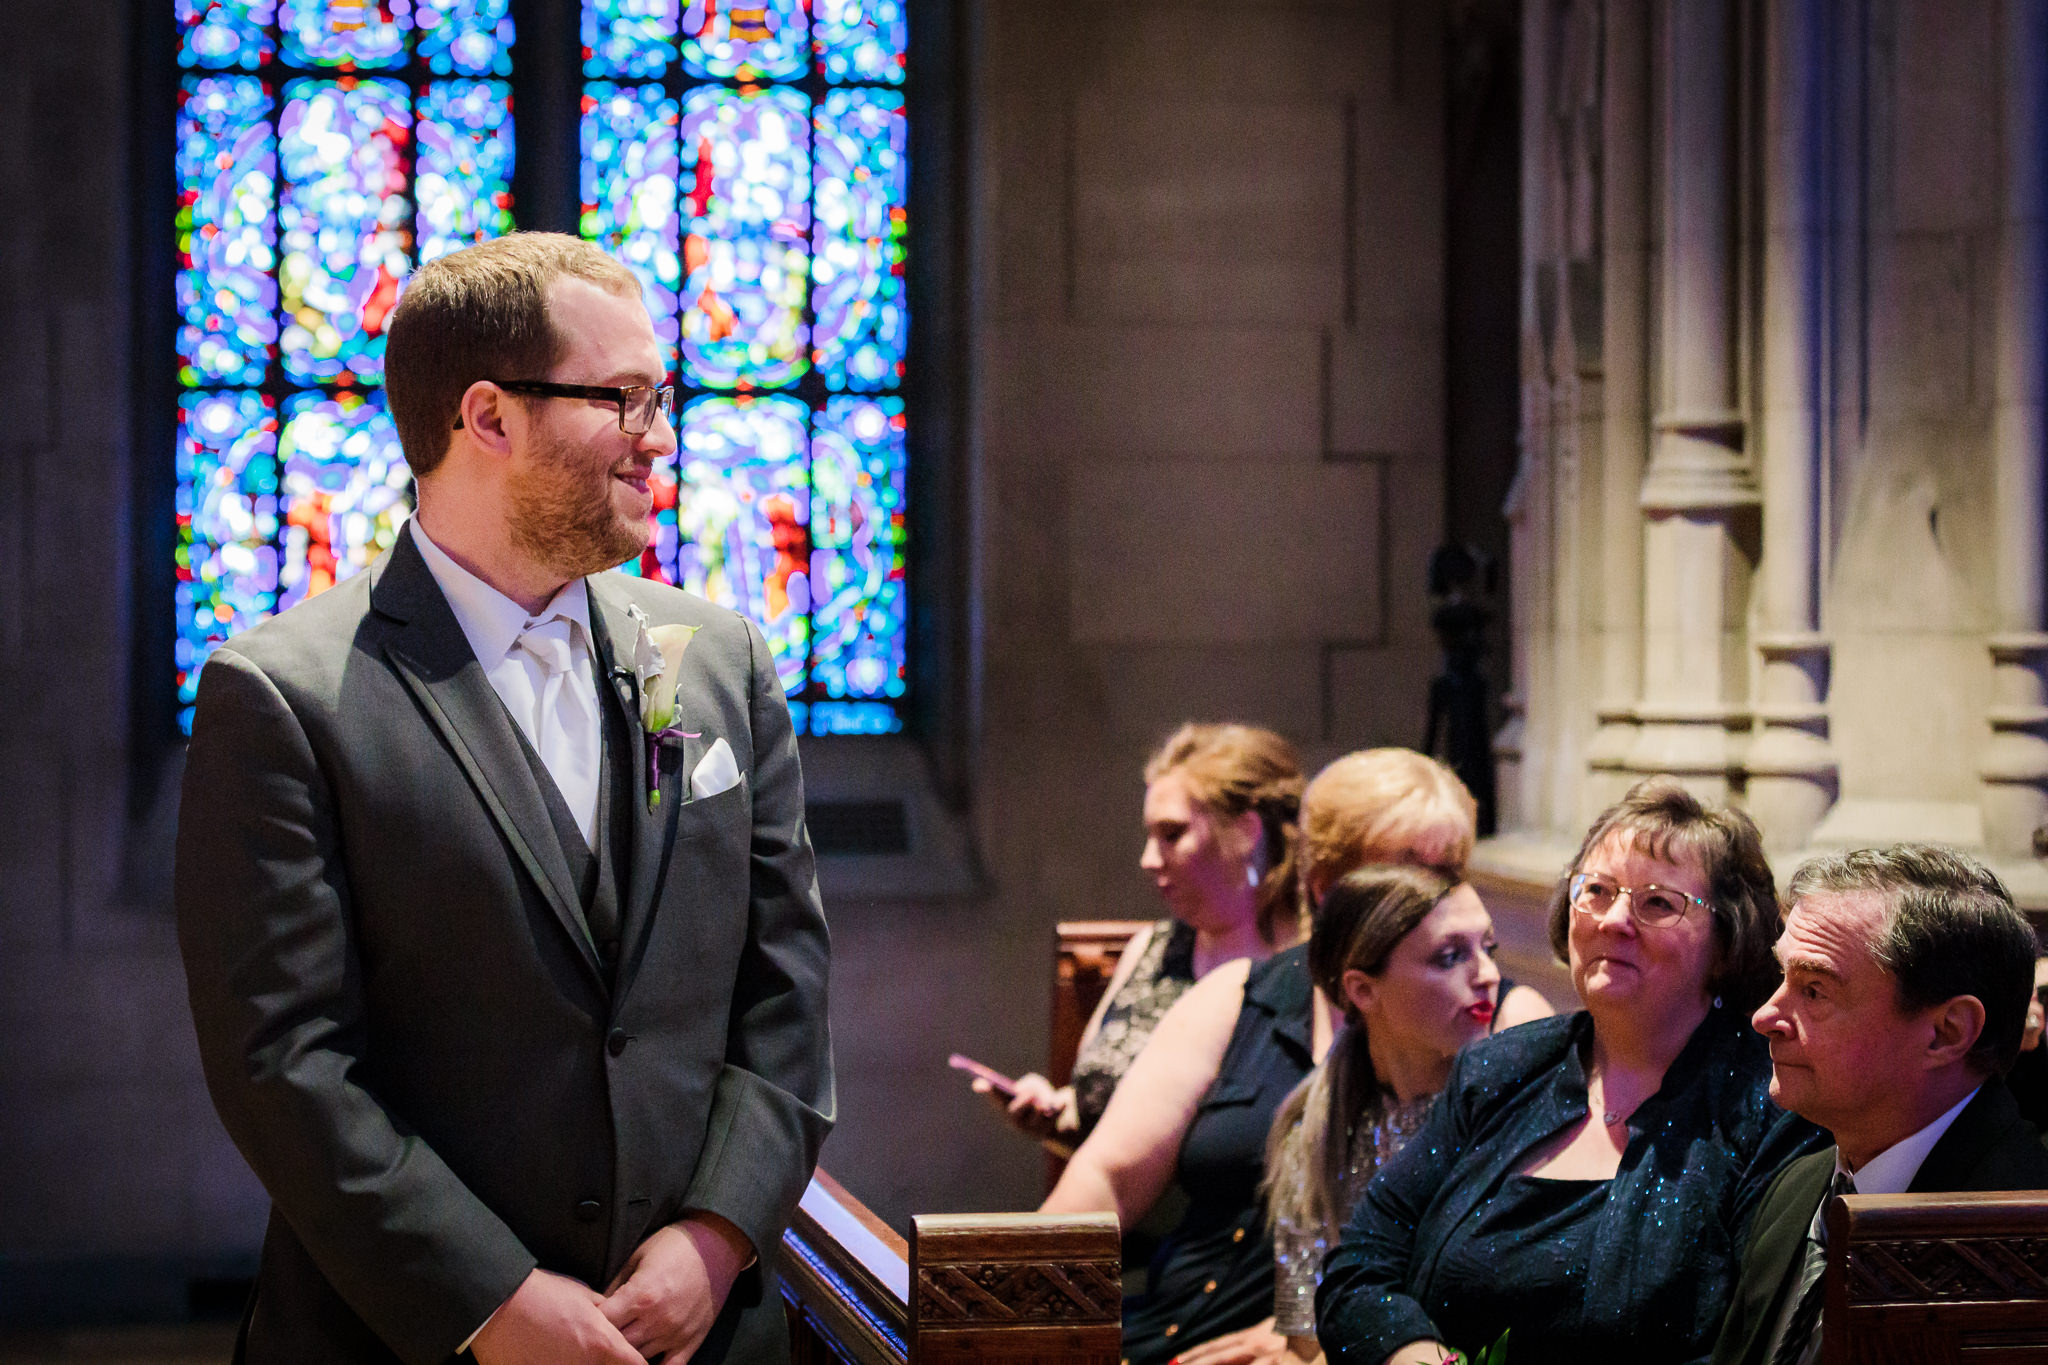 Groom smiles as his bride walks down the aisle at Heinz Chapel in Pittsburgh